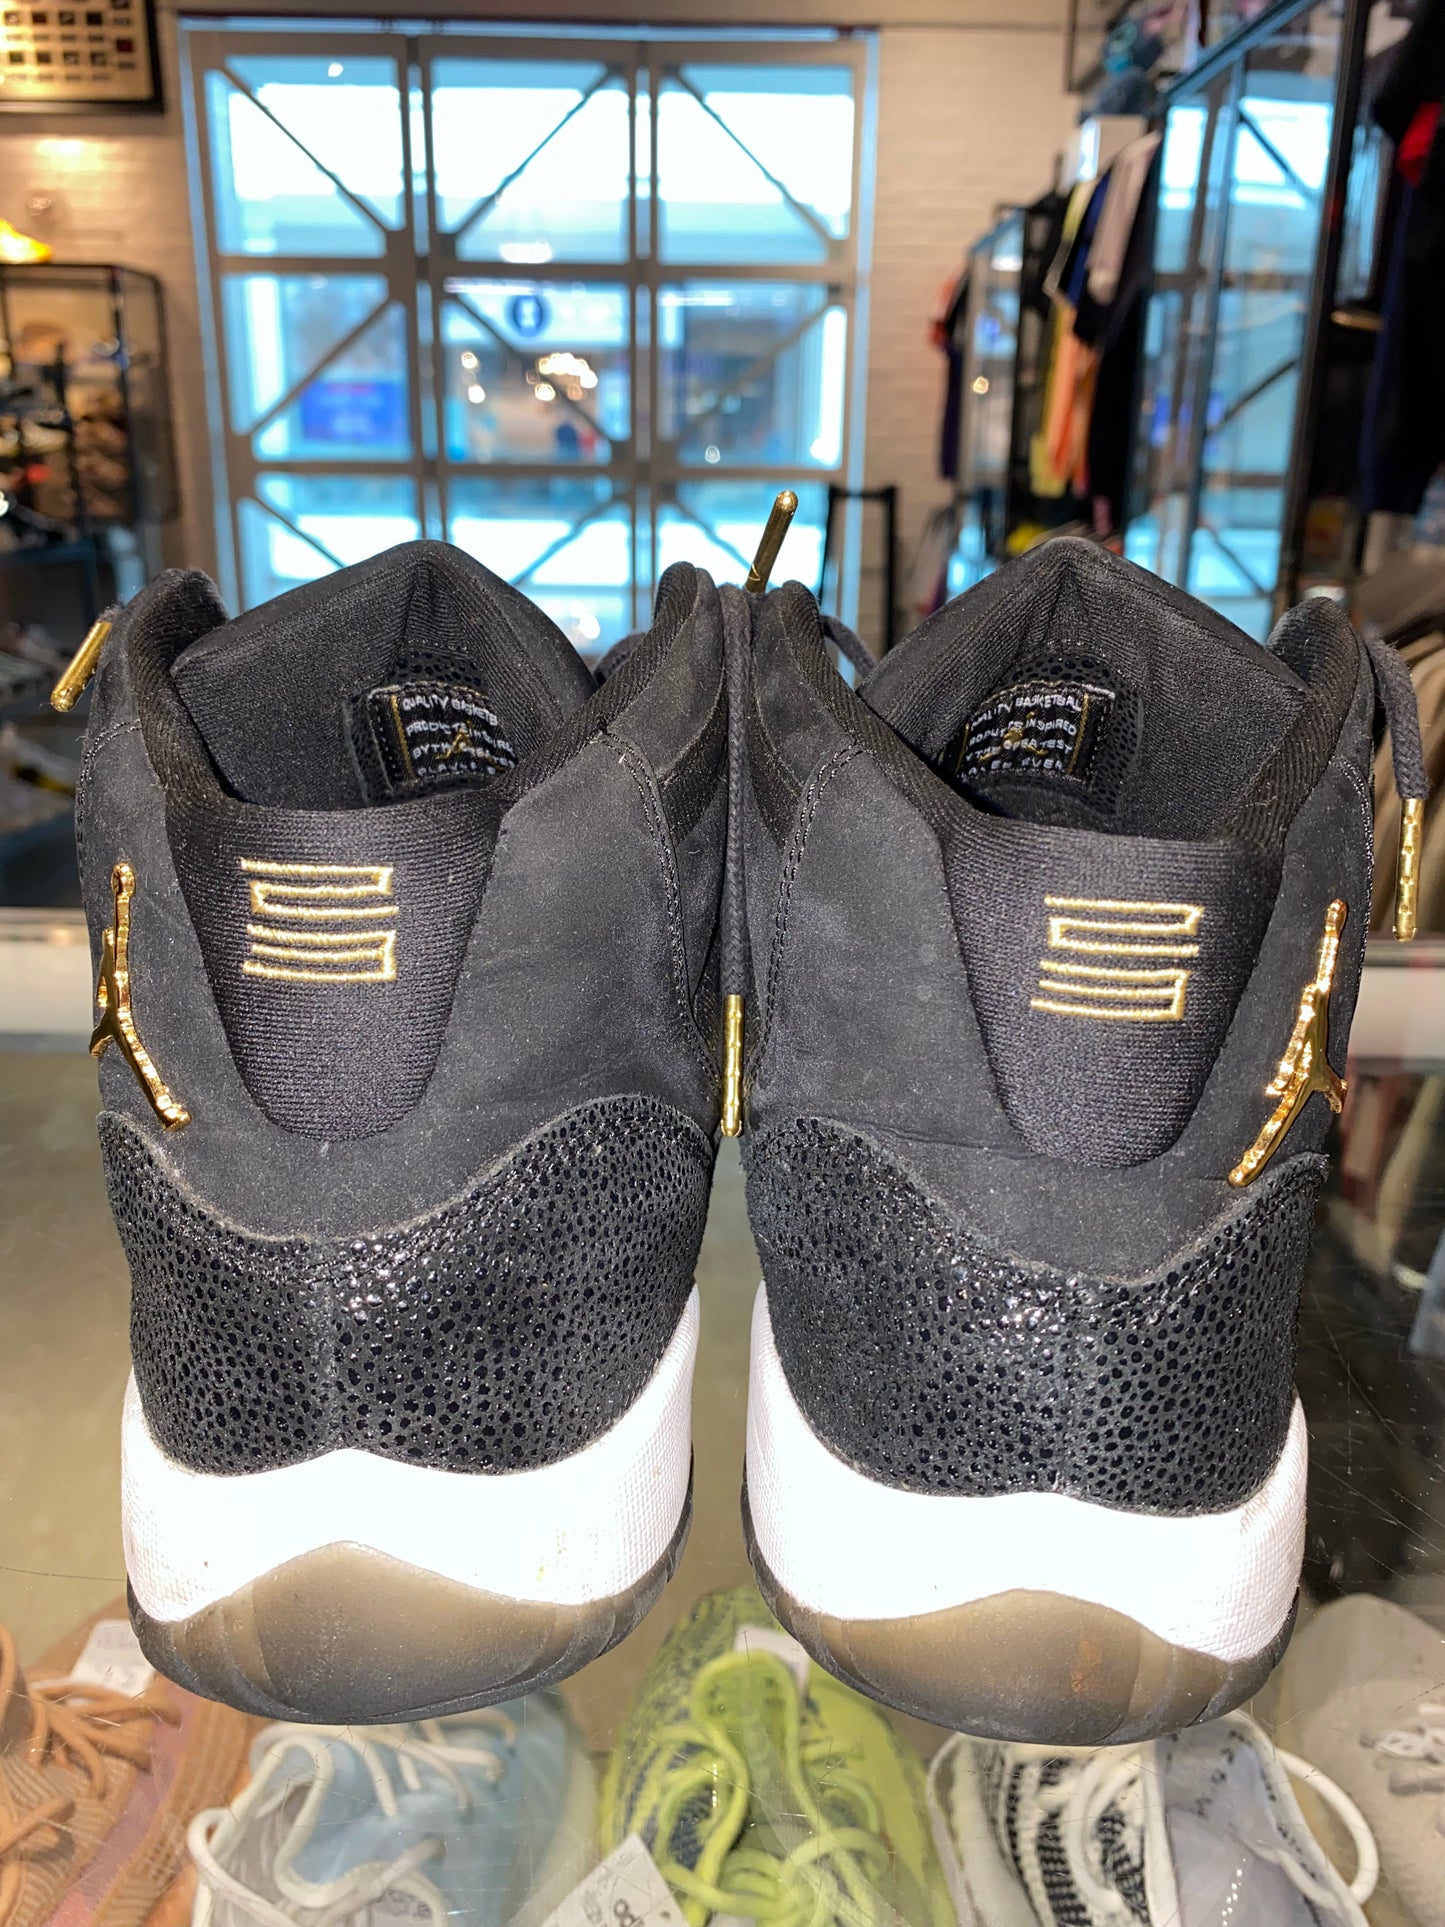 Size 7.5 (9W) Air Jordan 11 “Heiress” (Mall)